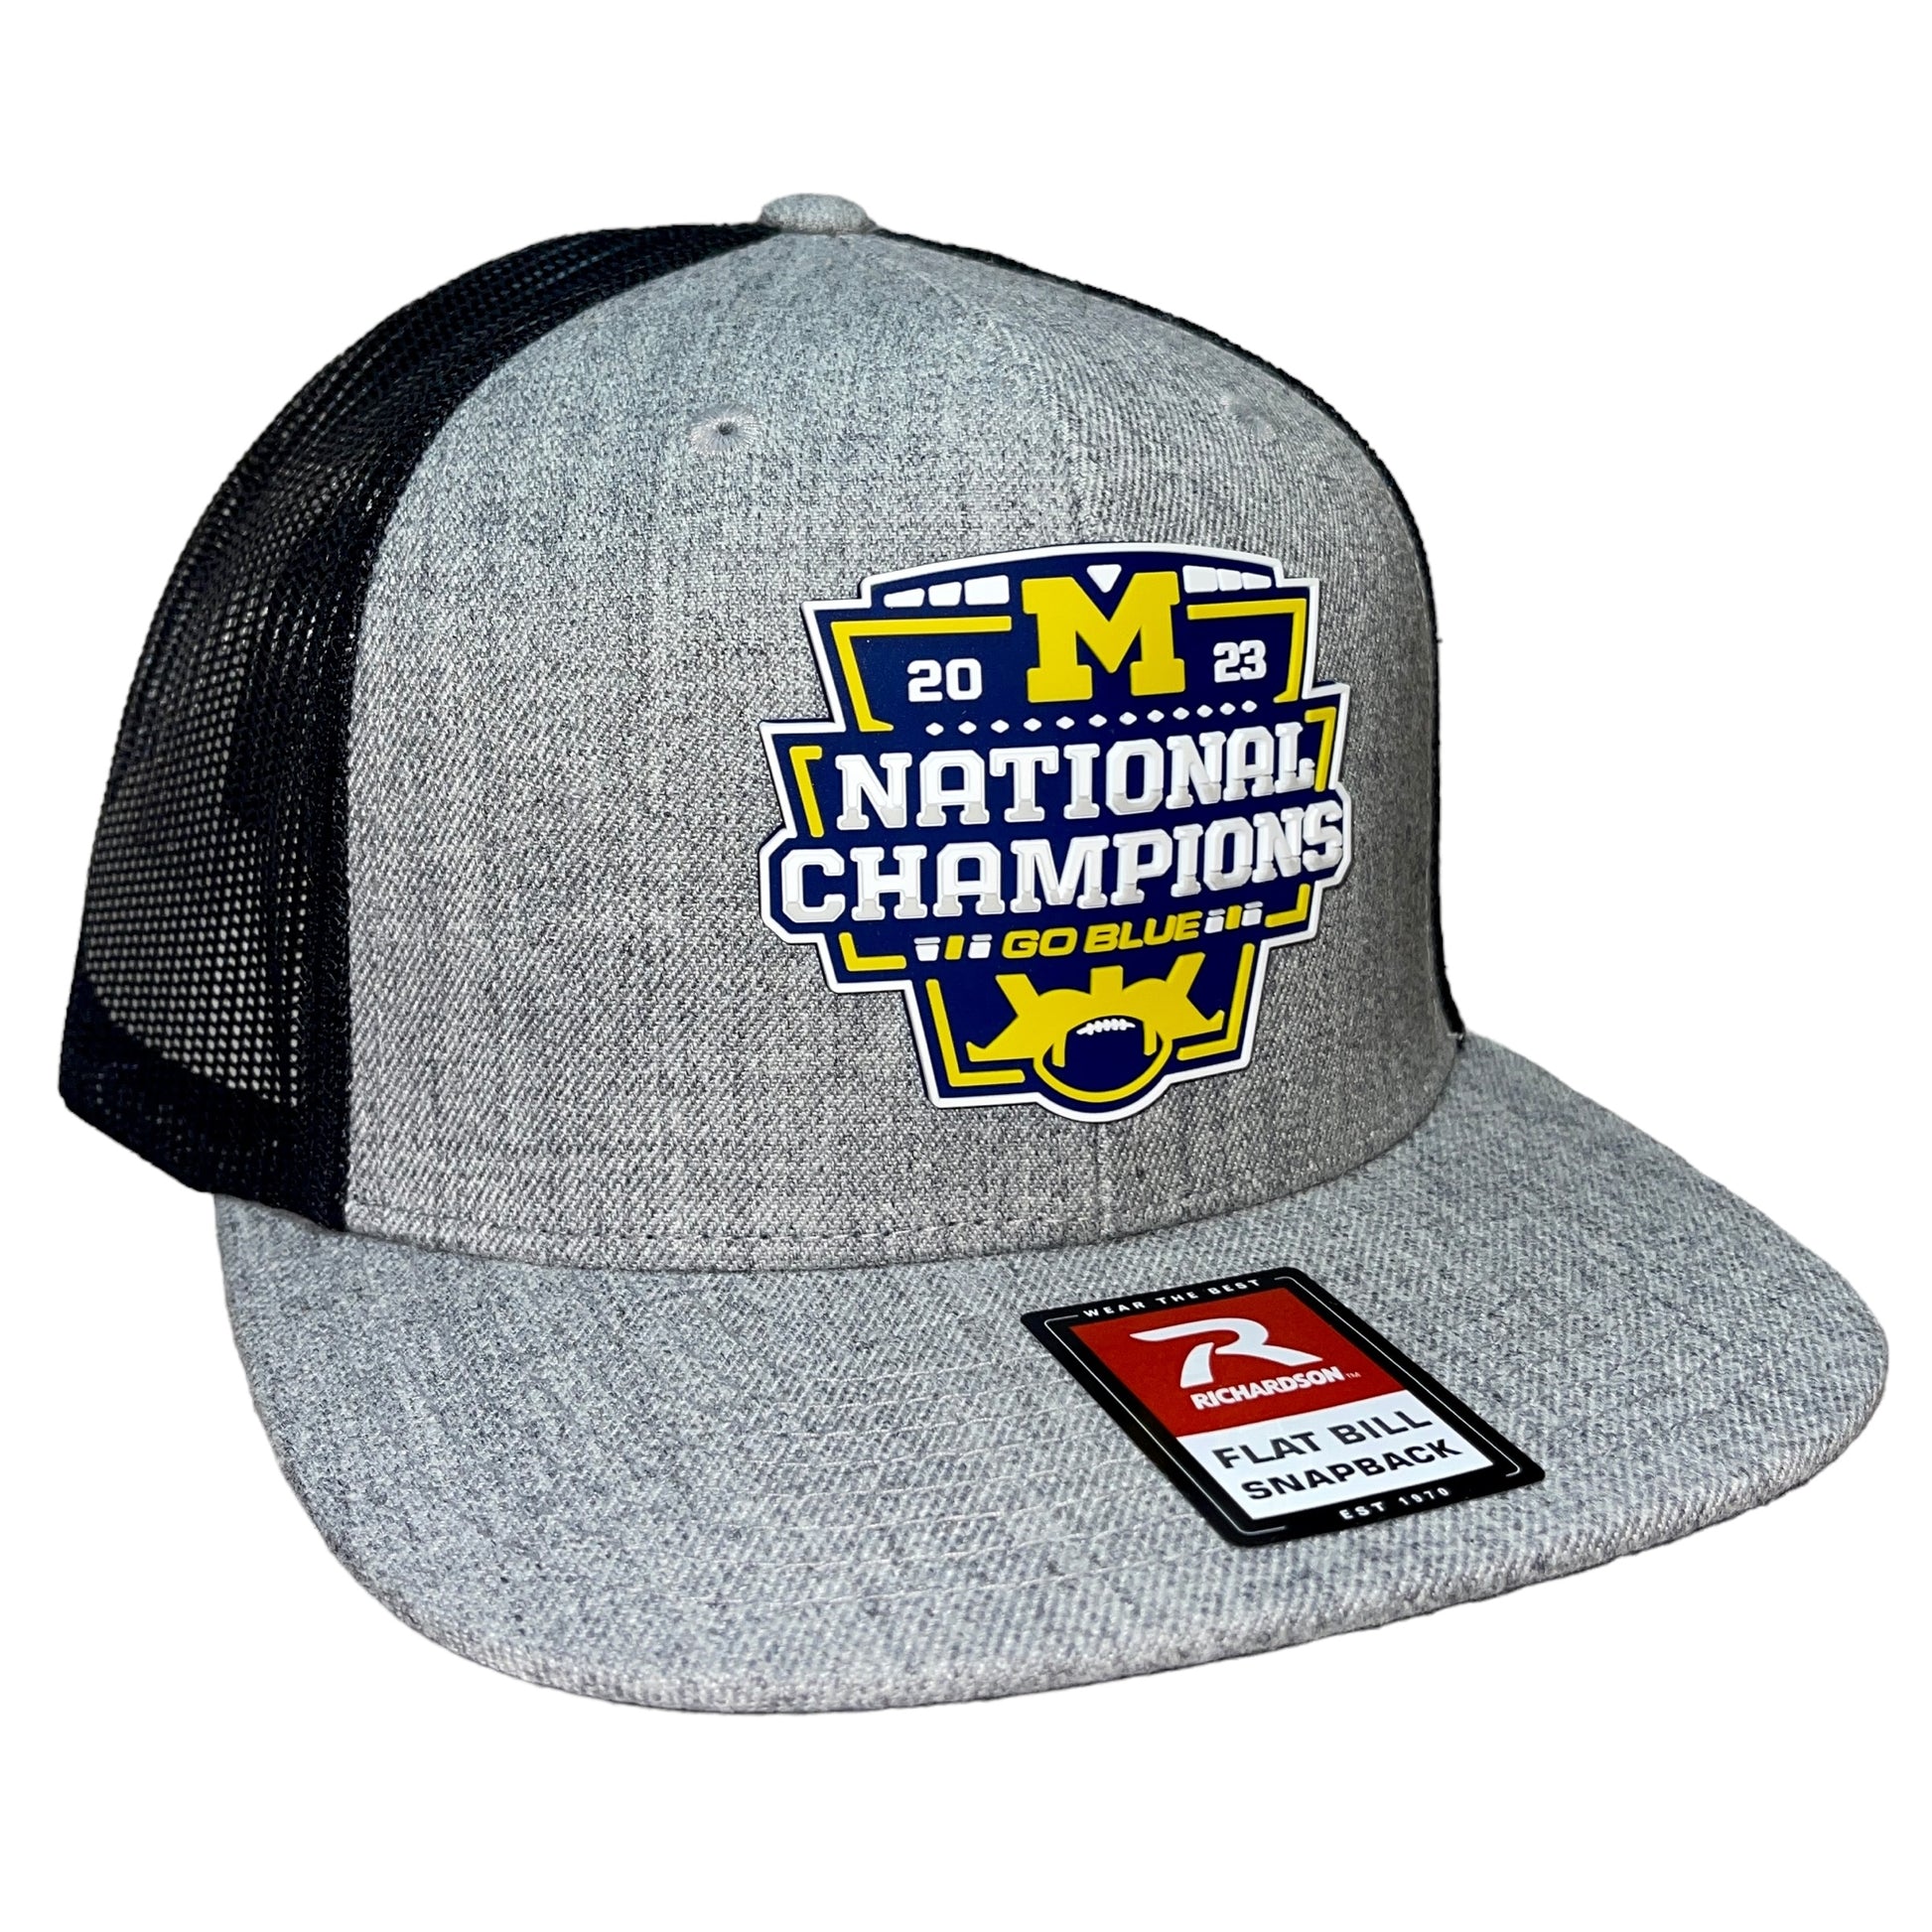 Michigan College Football Playoff 2023 National Champions Wool Blend Flat Bill Hat- Heather Grey/ Black - Ten Gallon Hat Co.